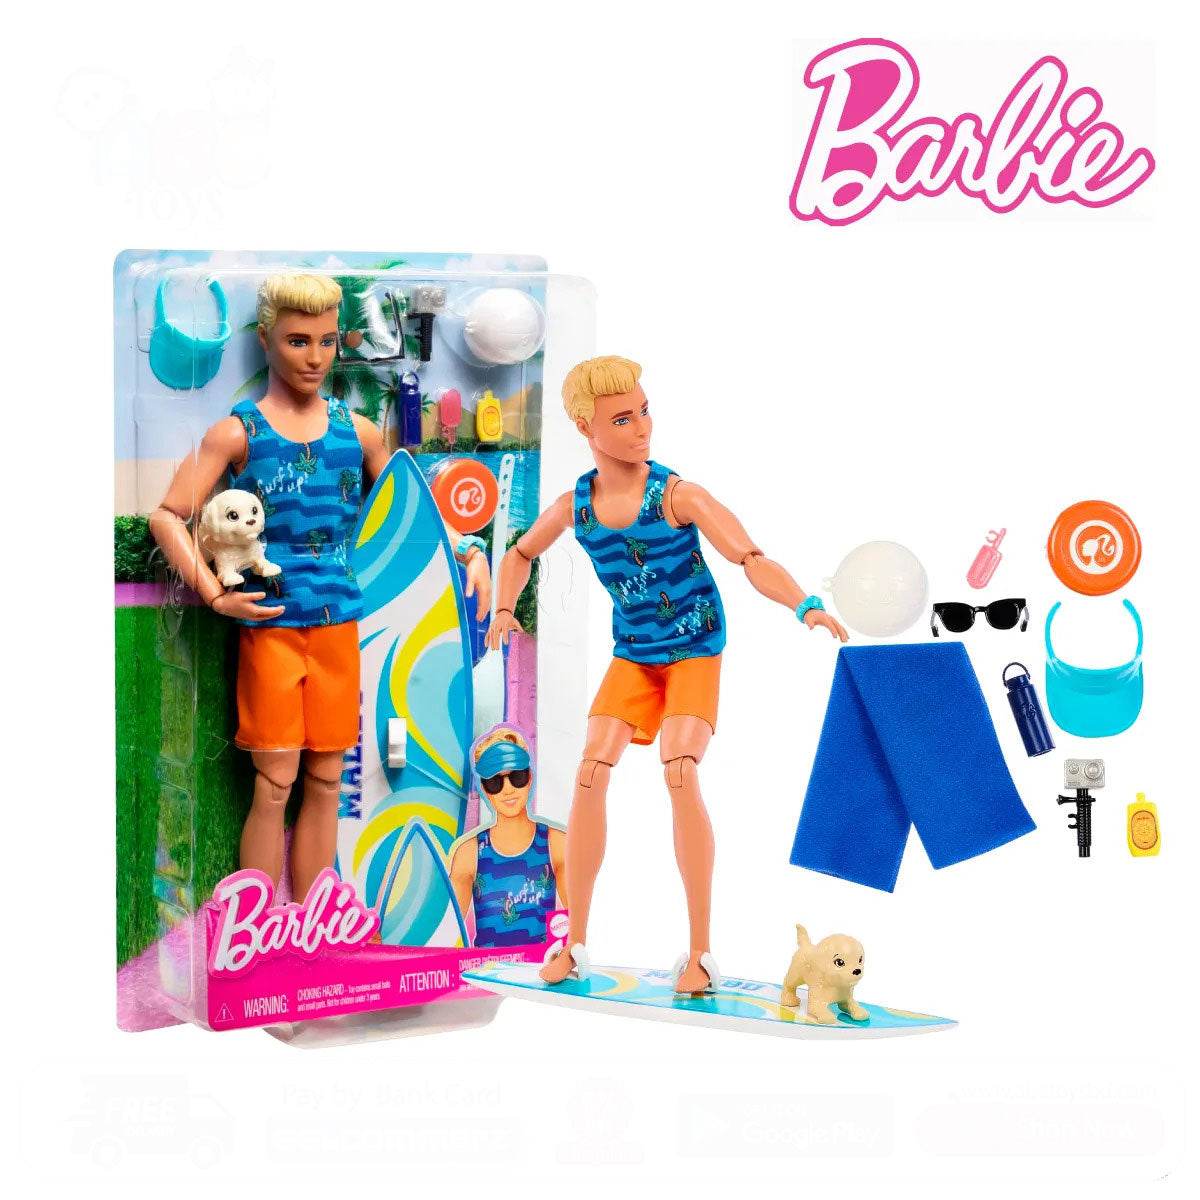 Barbie HPT50 Ken Surfboard Set, Dress-Up Doll